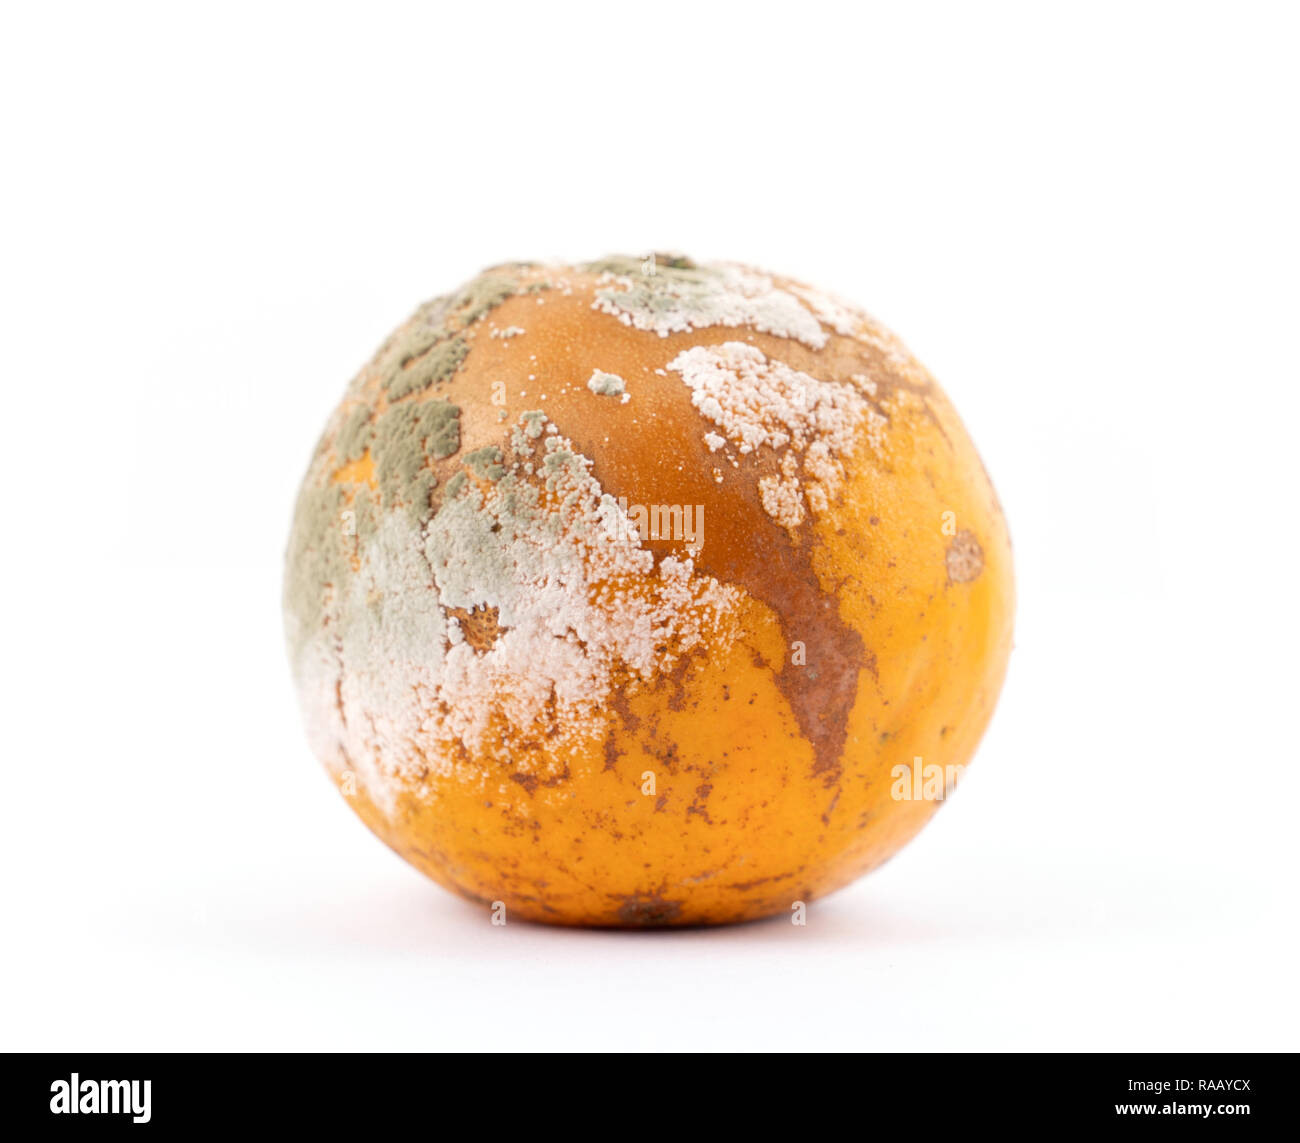 rotten and moldy orange on white background Stock Photo